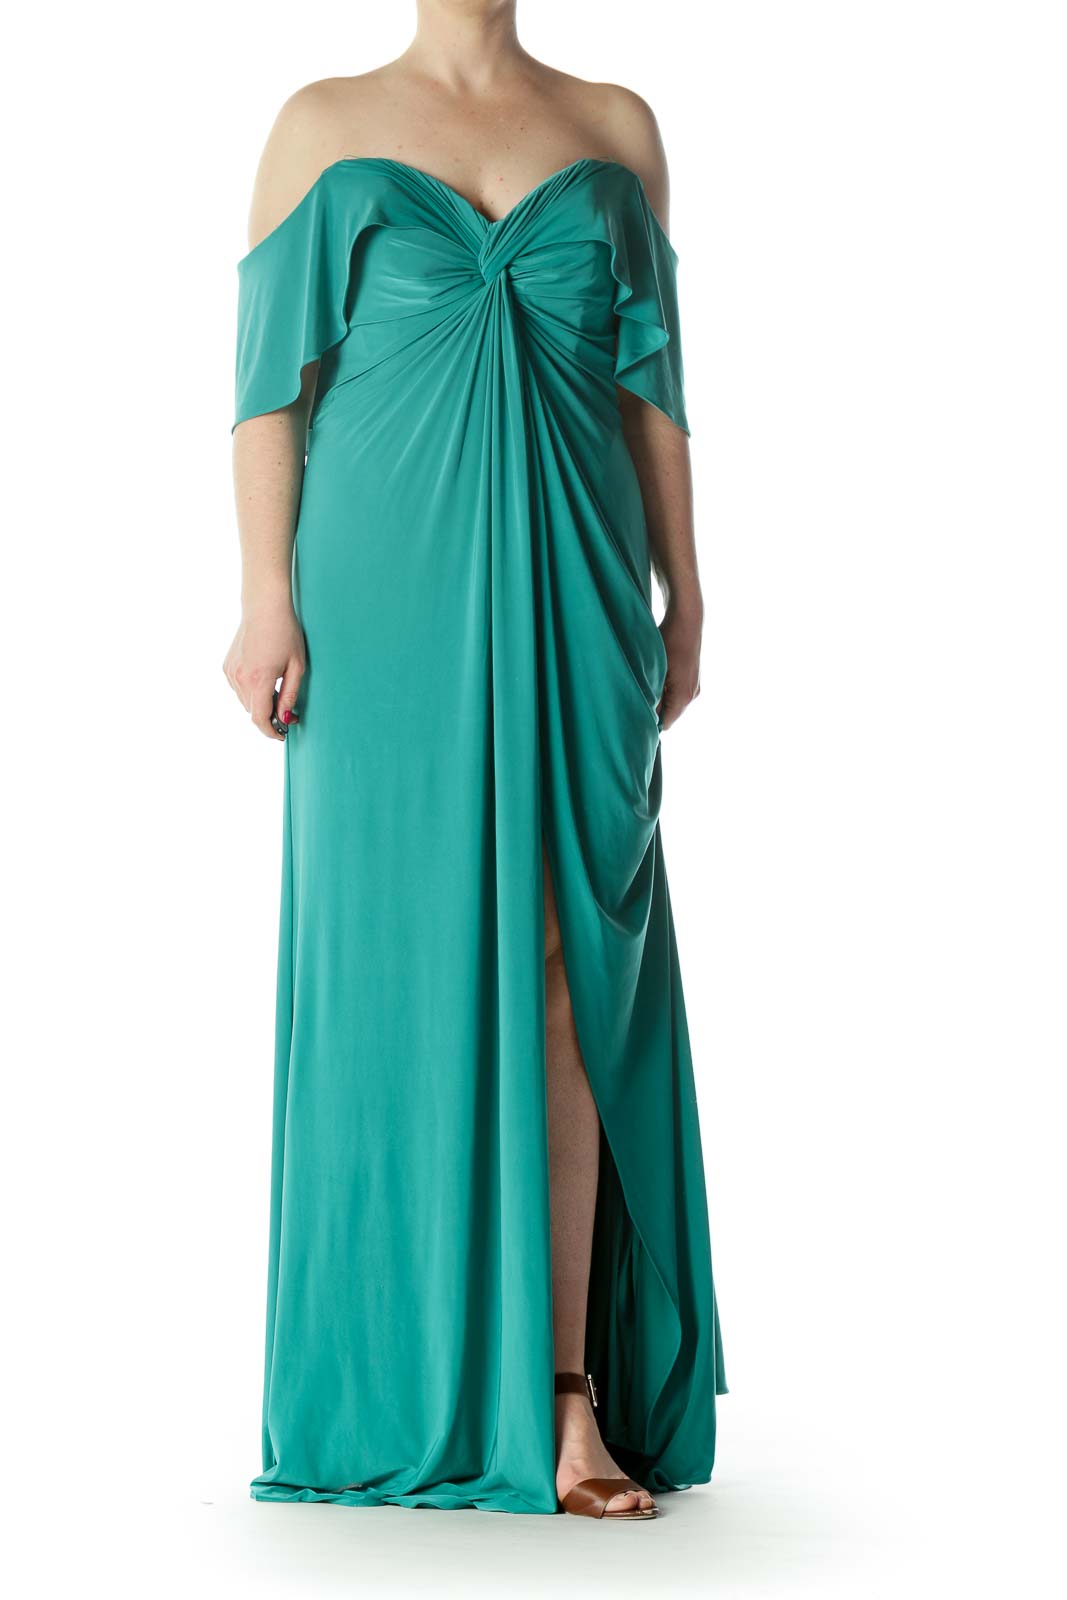 Emerald-Green Sweetheart-Neckline Knot-Detail Inside-Structure Evening Dress Front